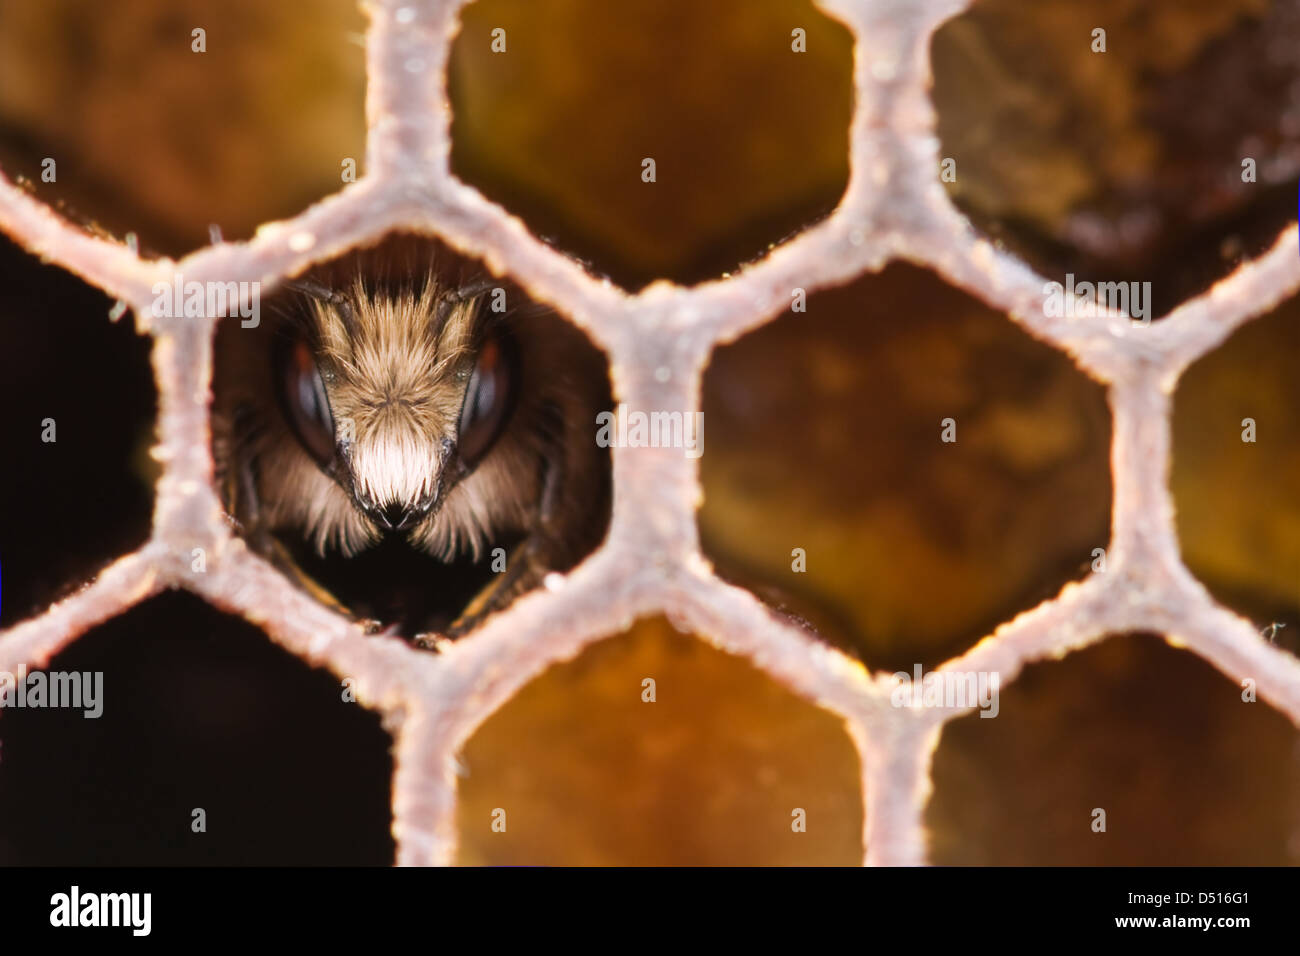 yong bee inside honeycomb closeup Stock Photo